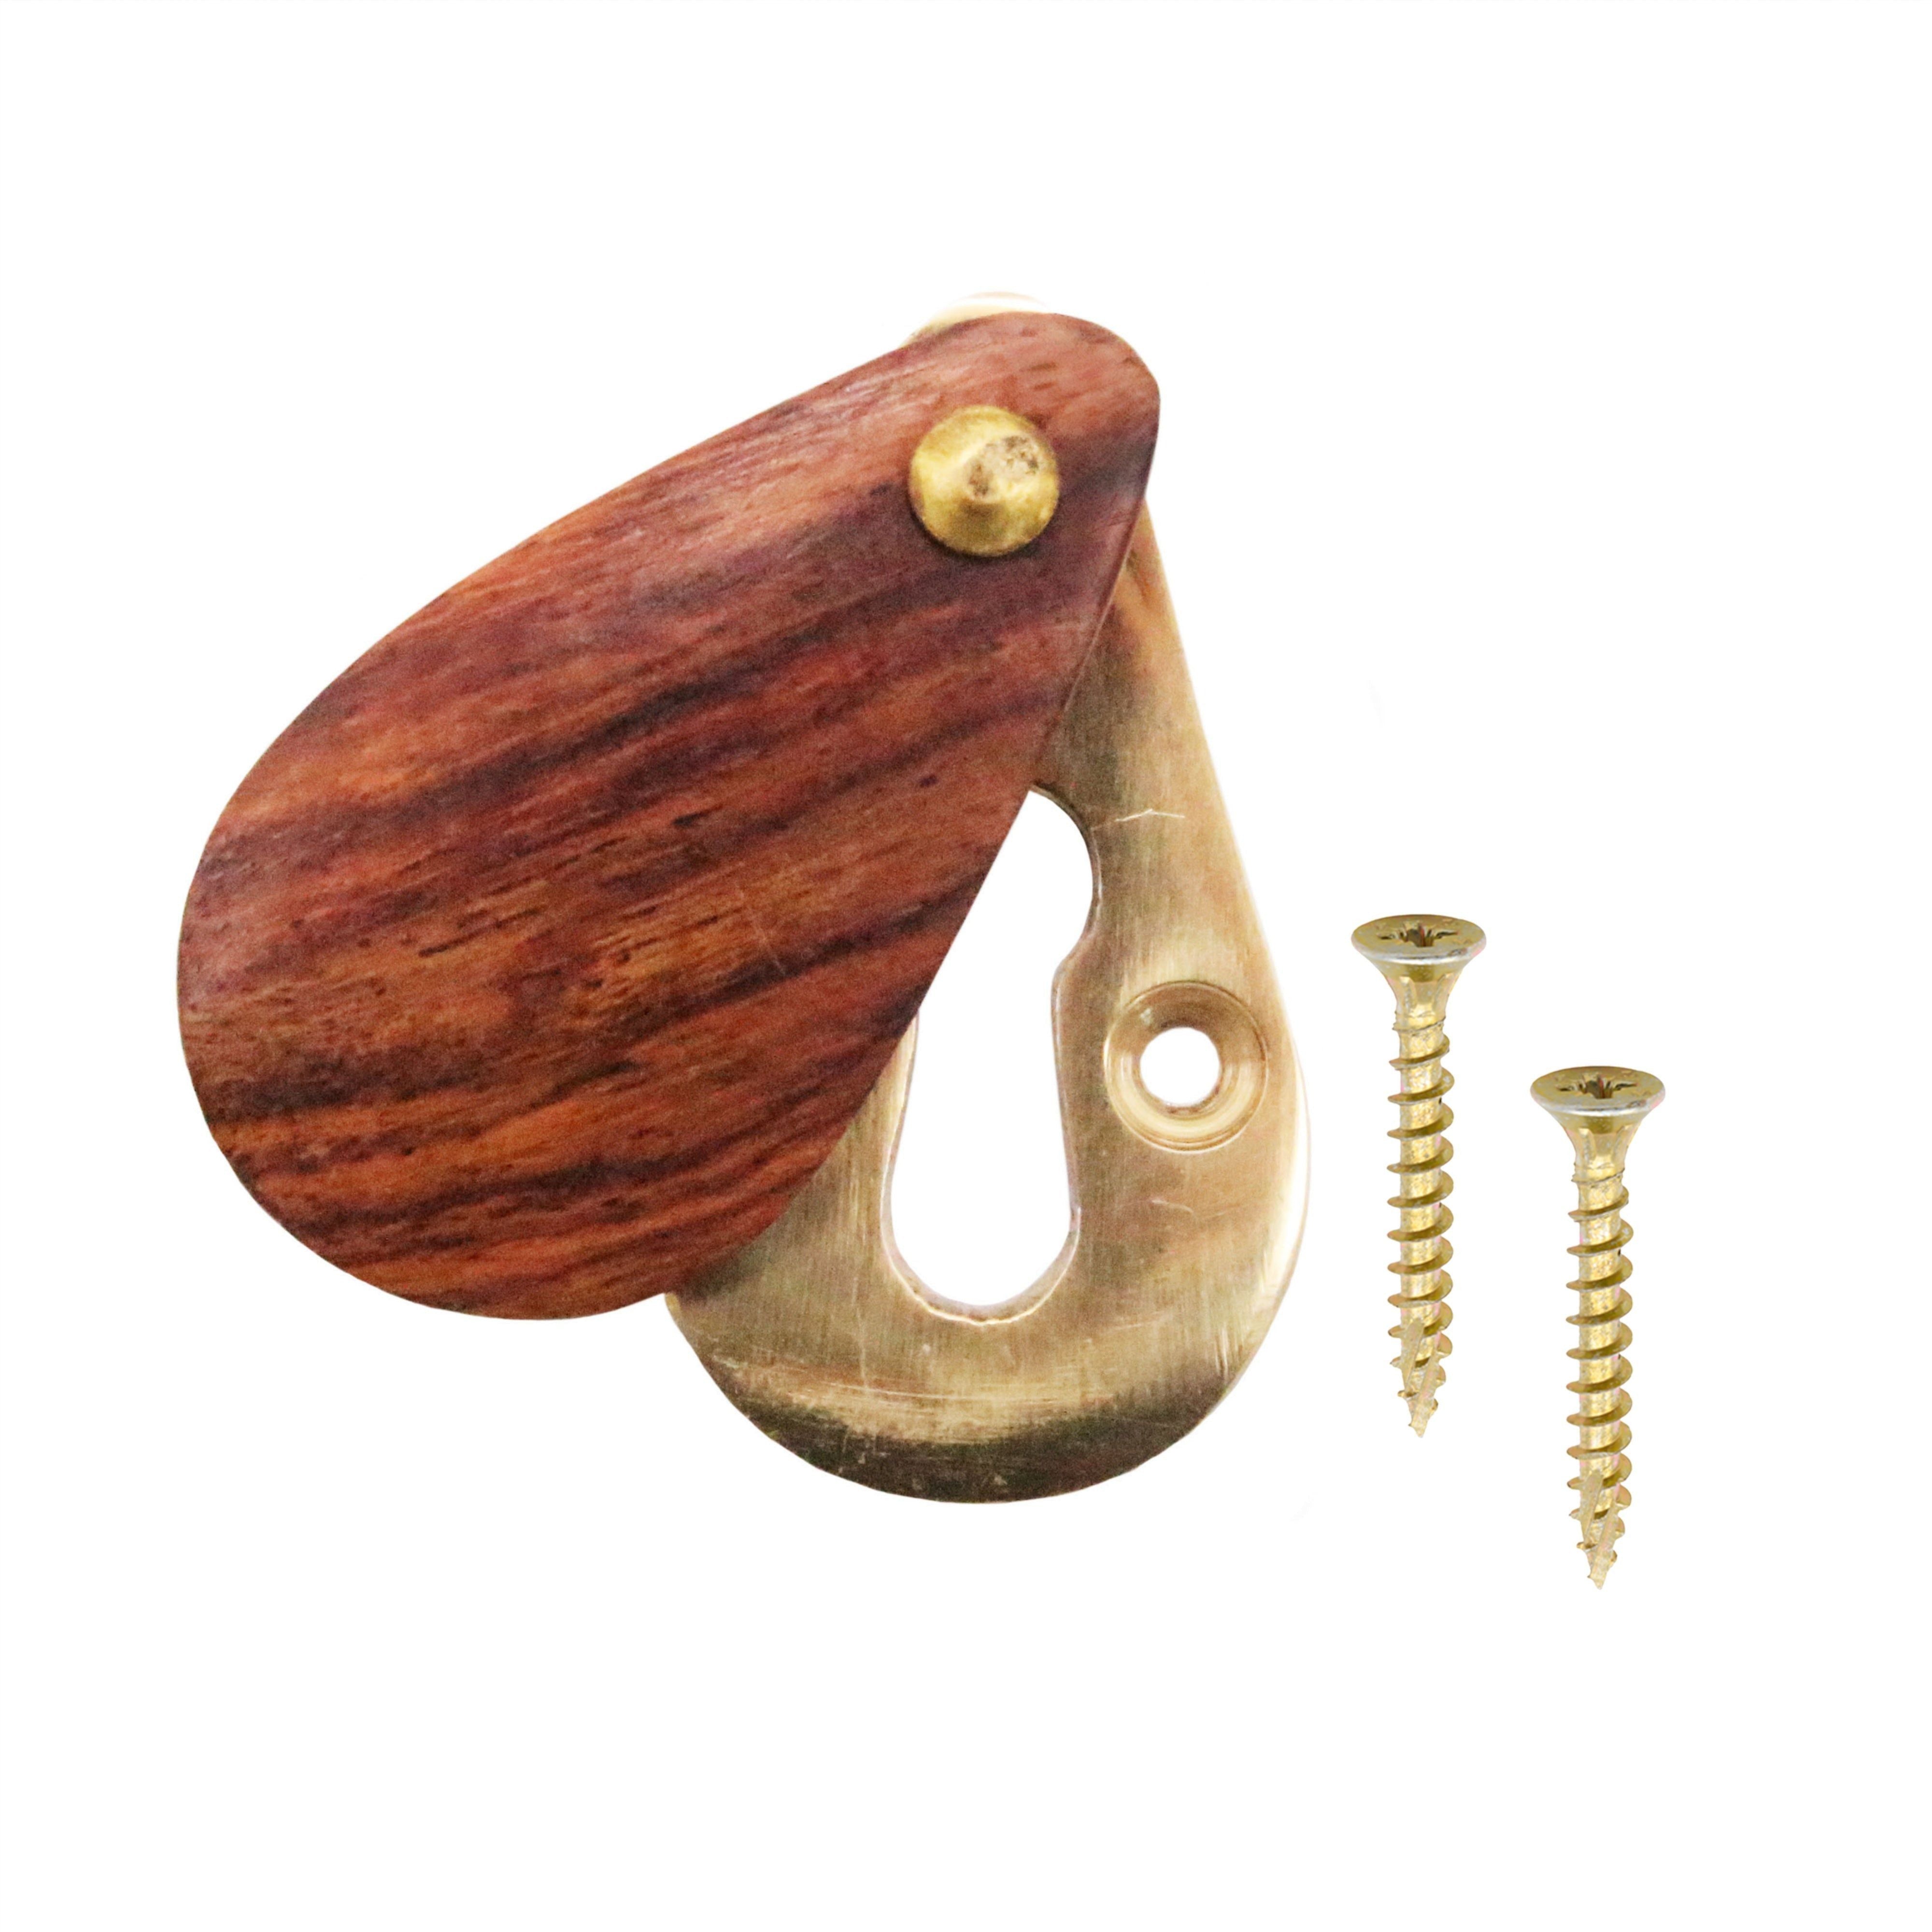 Beehive Escutcheons  Traditional Keyhole Covers